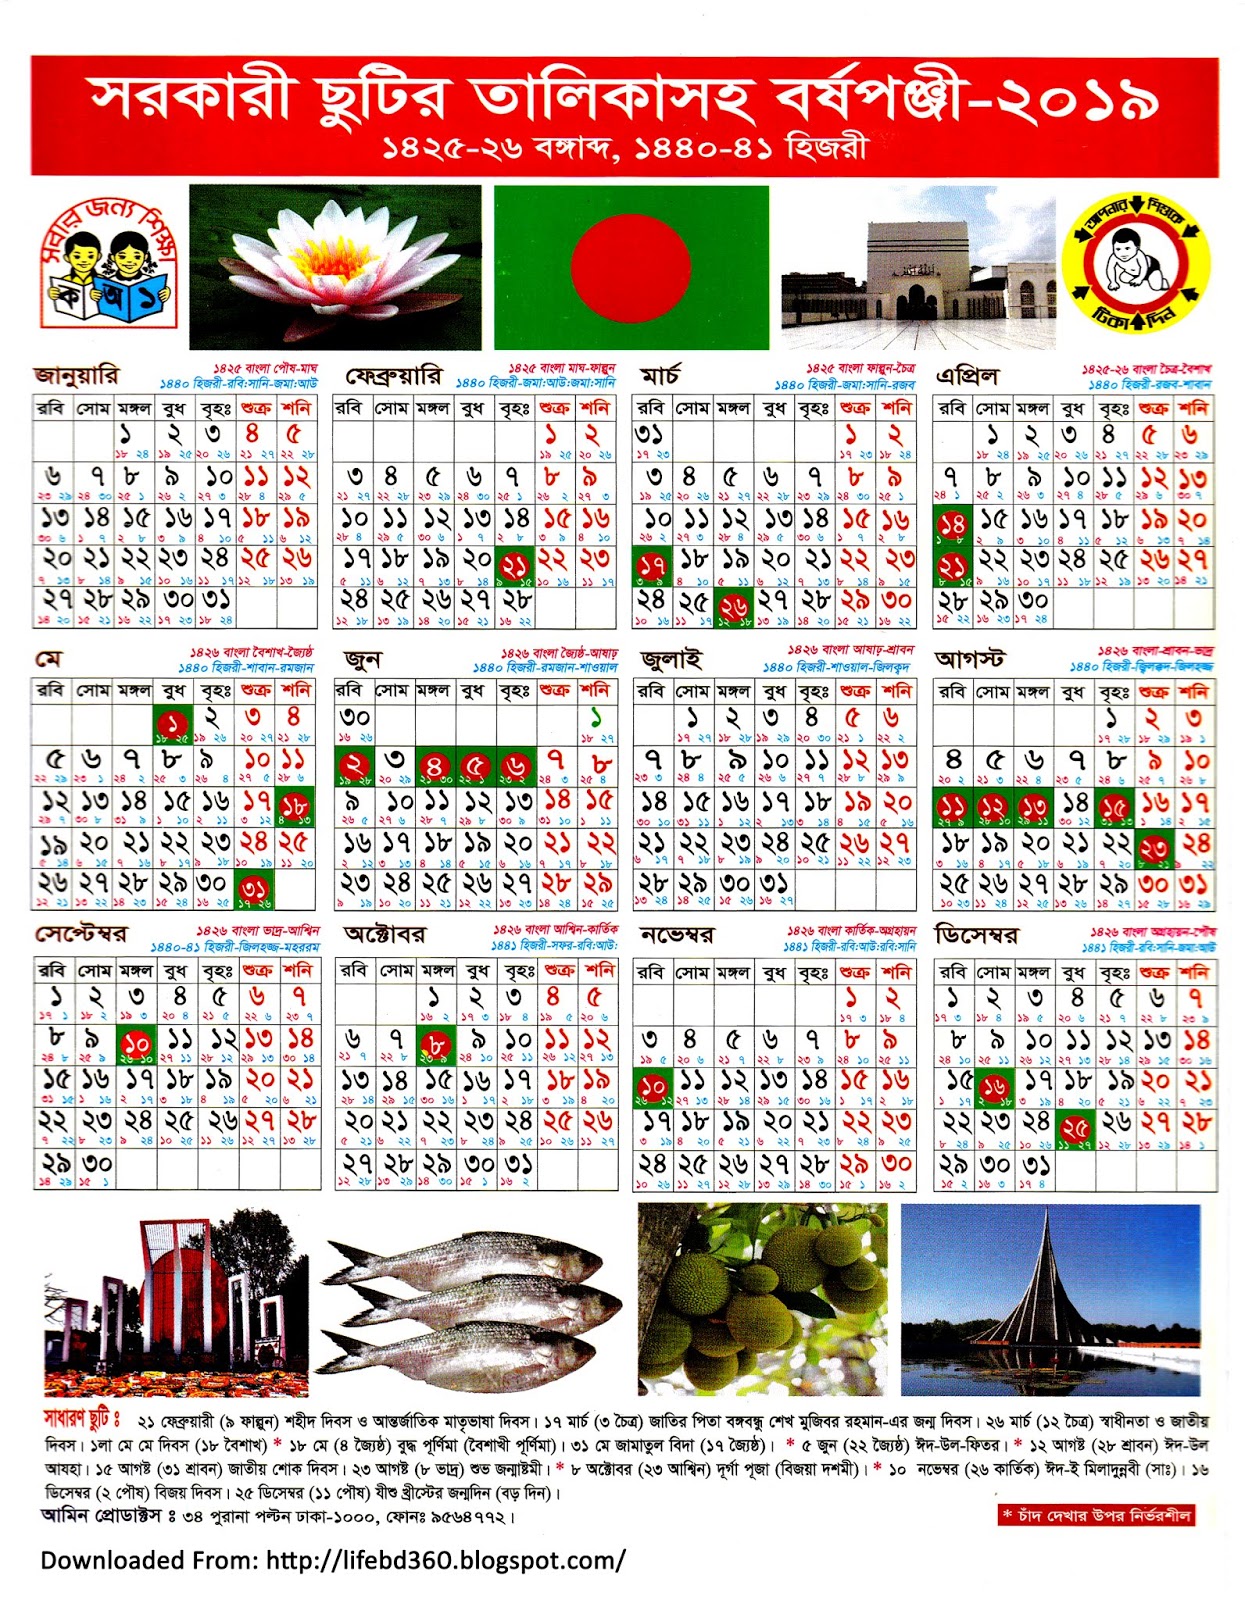 BANGLADESH CALENDAR 2020 PDF Calendario 2019